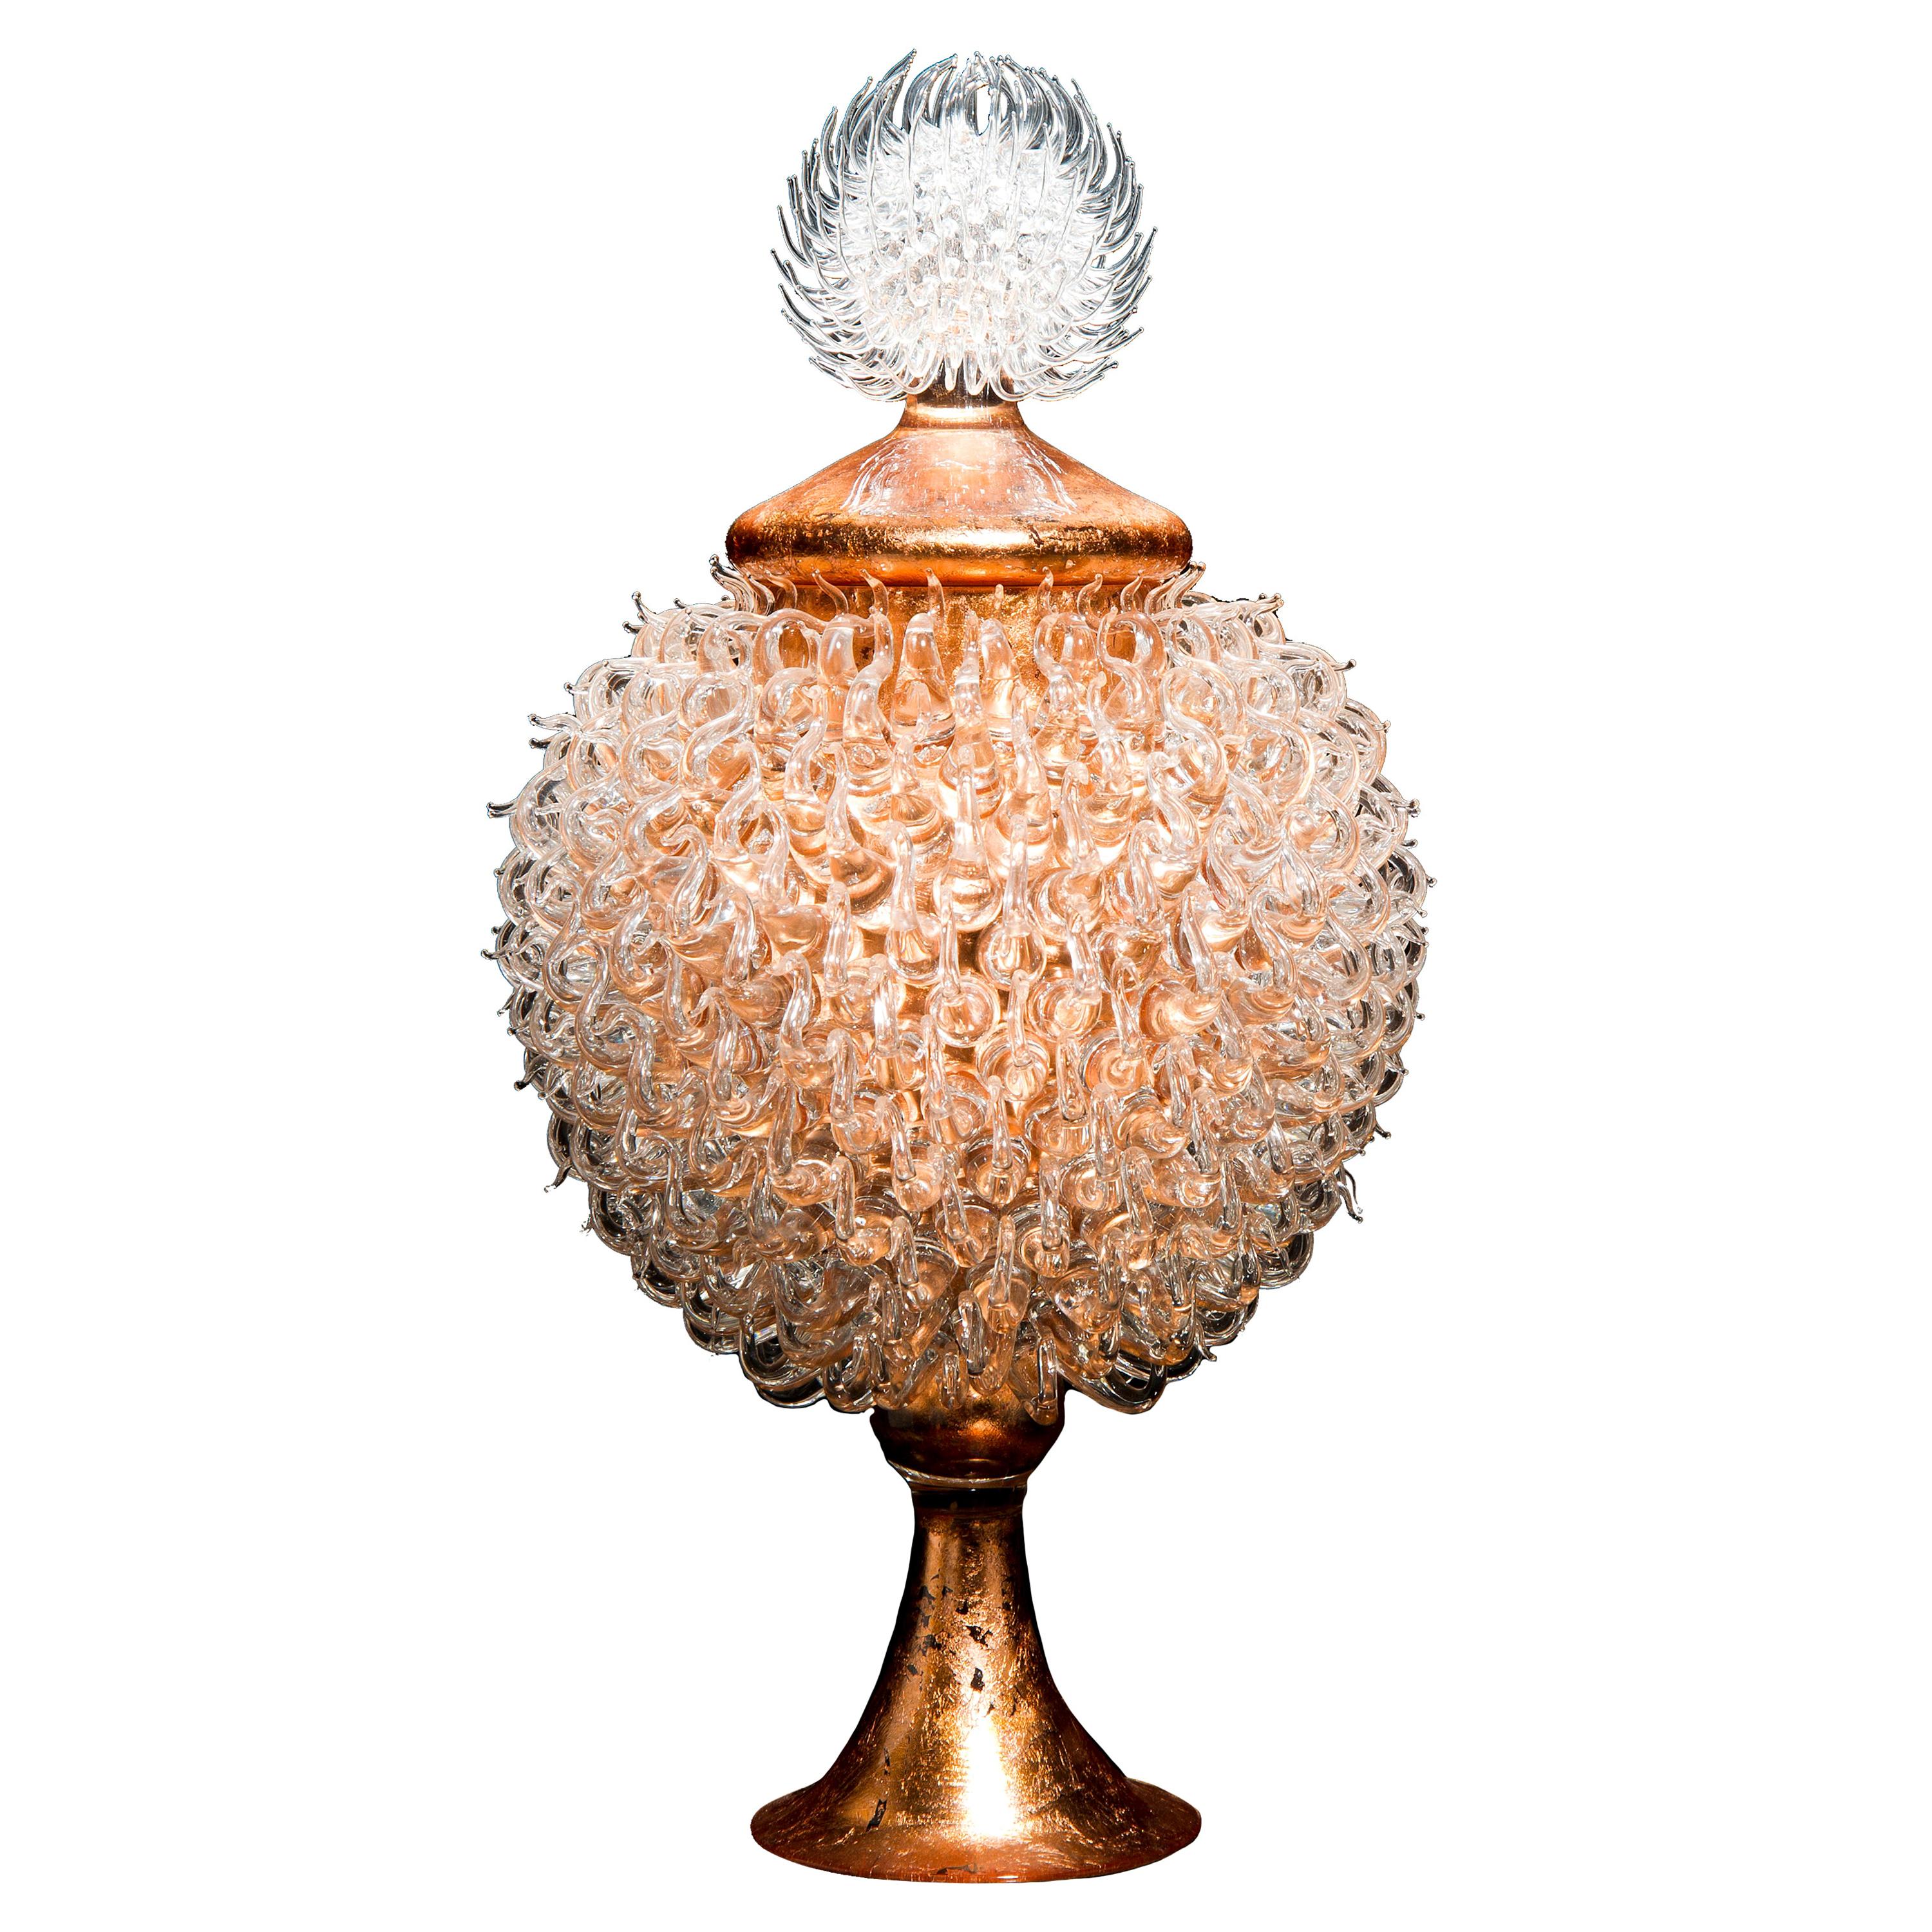 Round Venus Jar with Thistle Top, a Glass & Copper Vessel by James Lethbridge